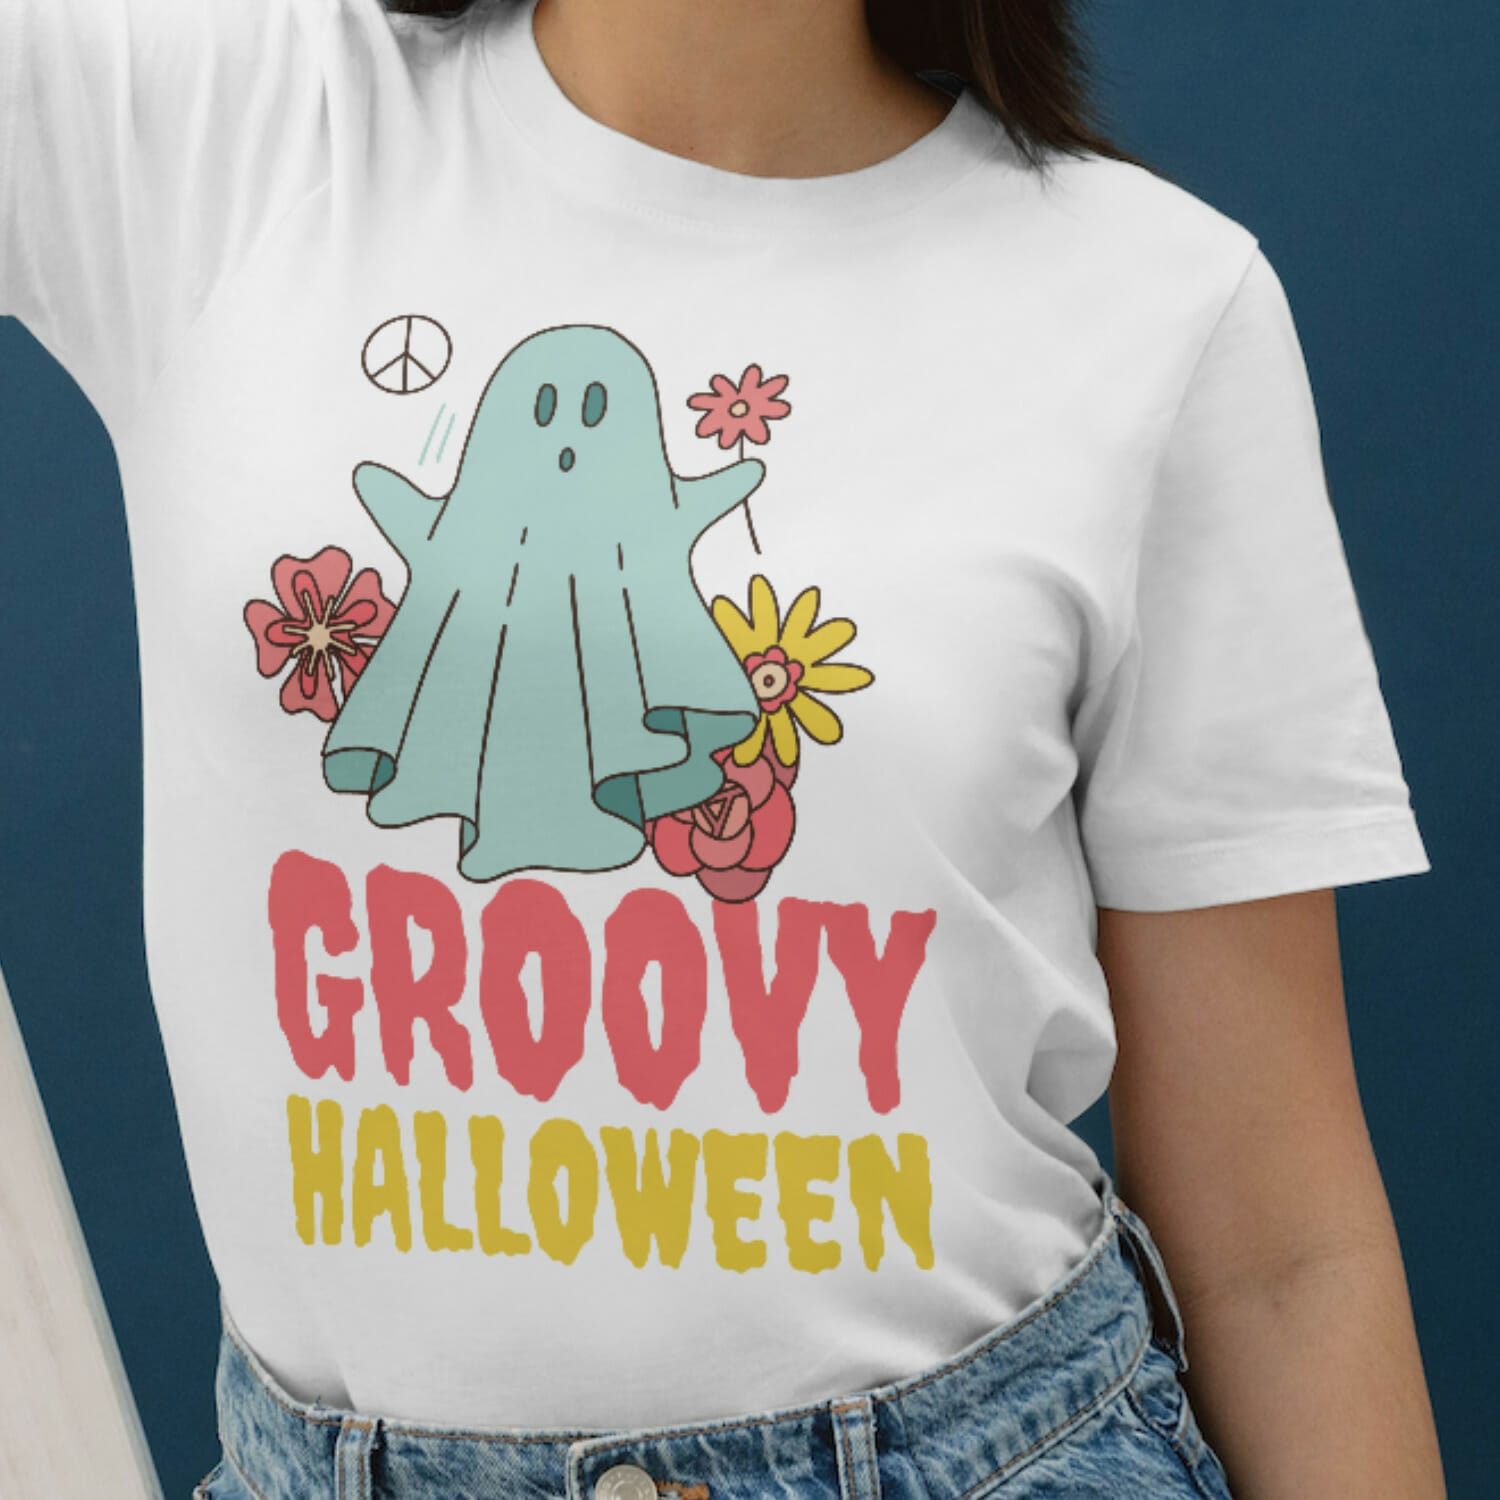 Groovy halloween Ghost T shirt Design